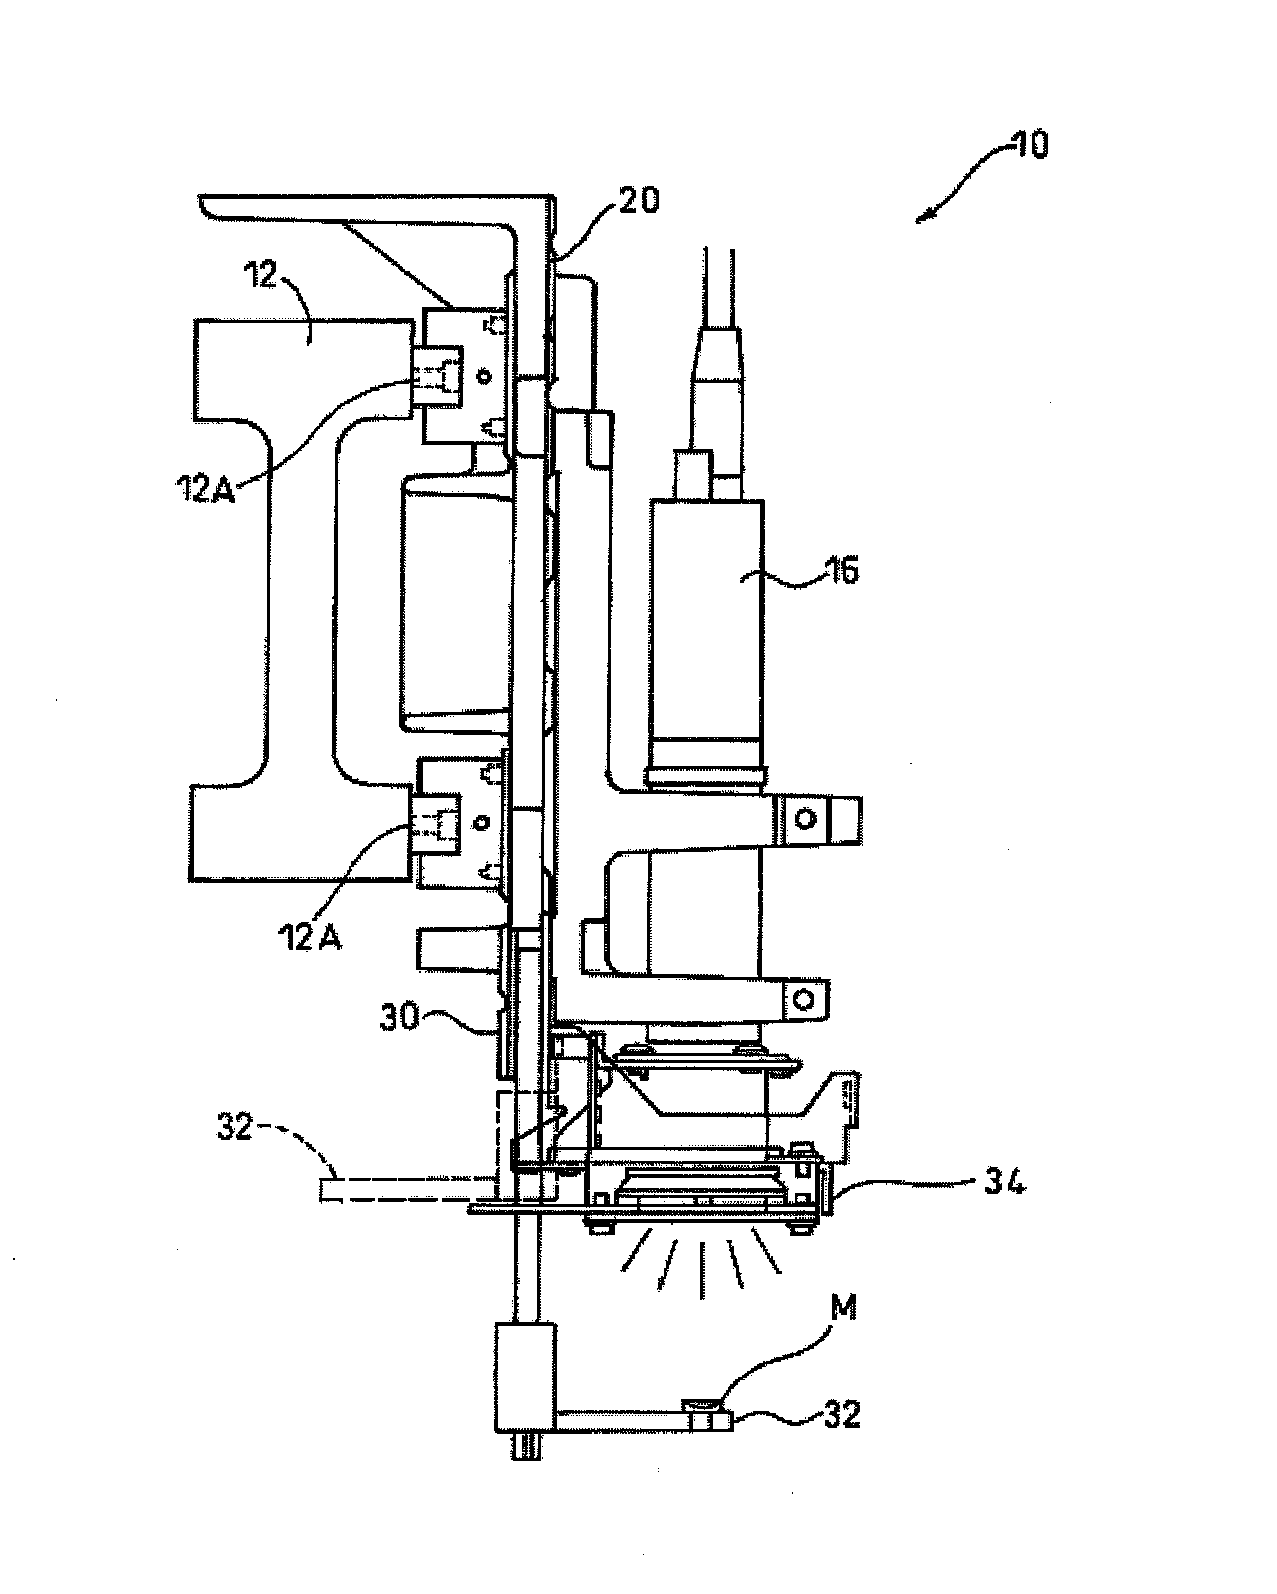 Surface mounting apparatus